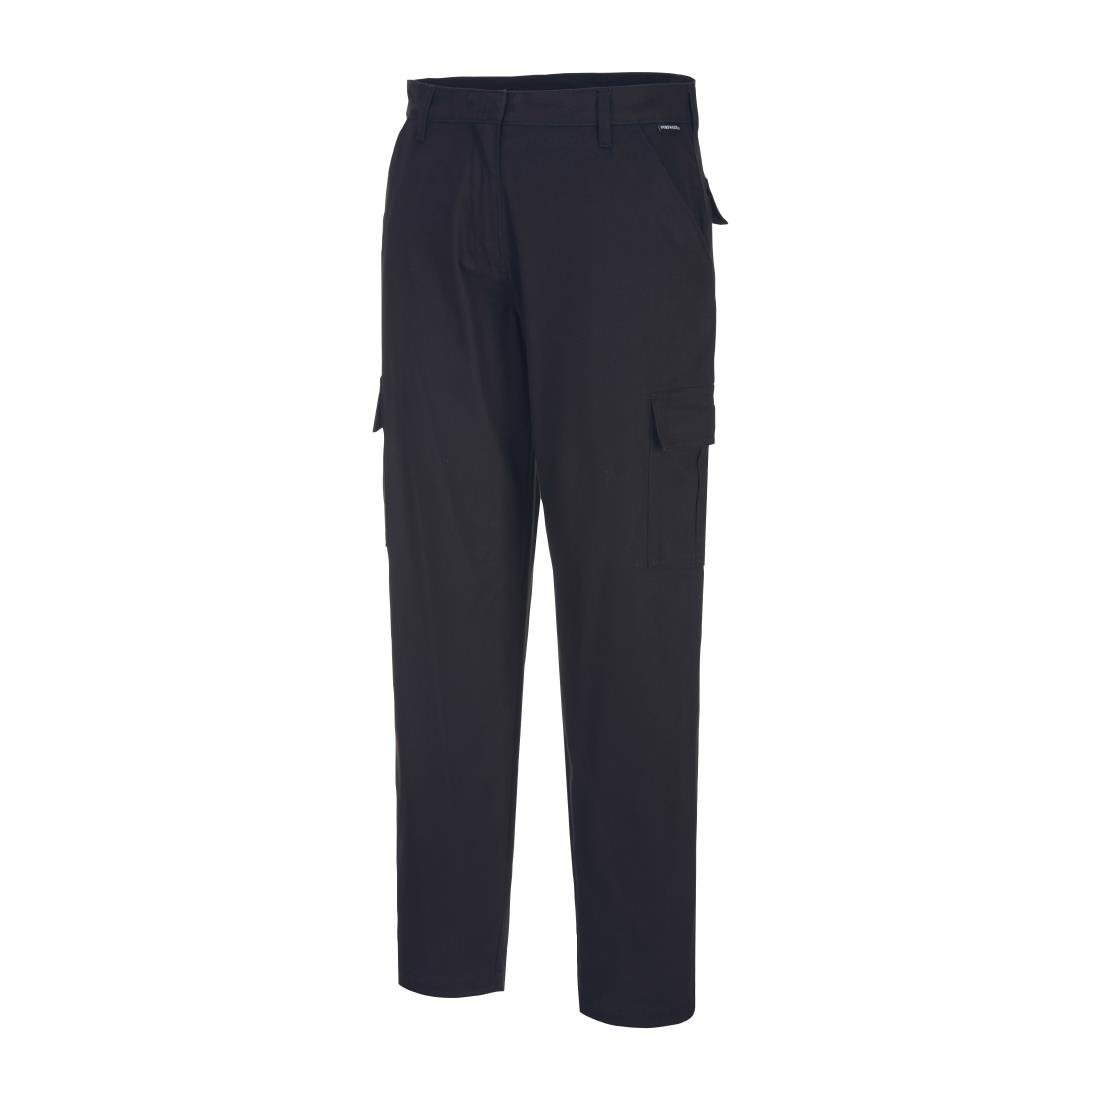 BA088-8 Portwest Eco Women's Stretch Cargo Trousers Black Size 8